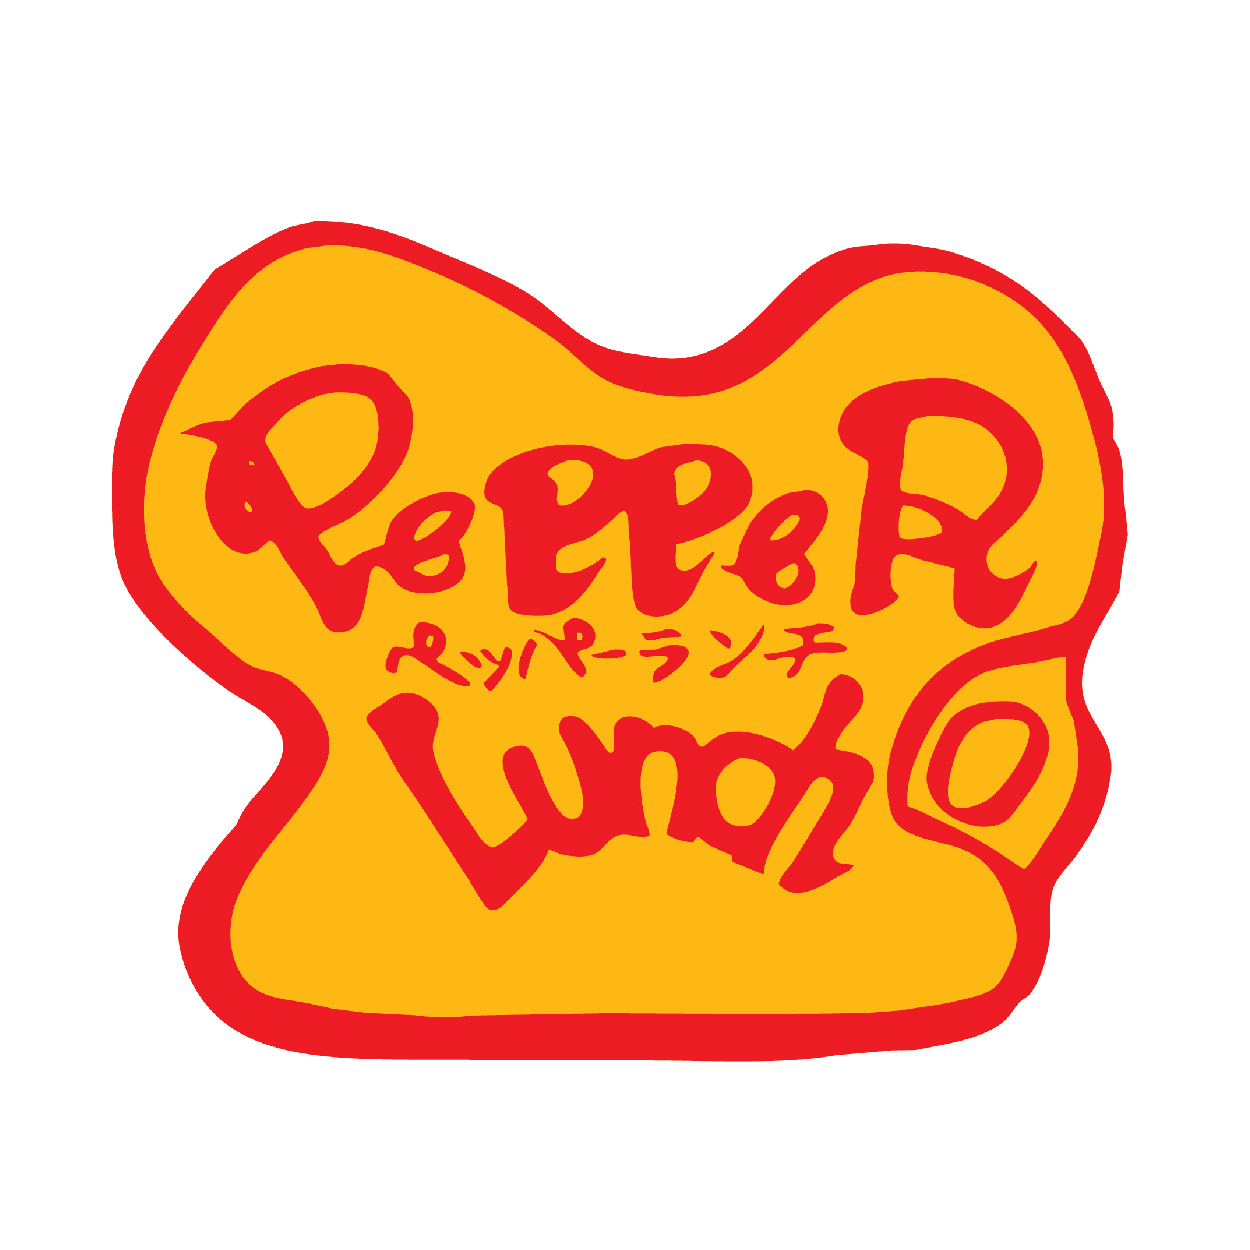 胡椒厨房 Pepper Lunch